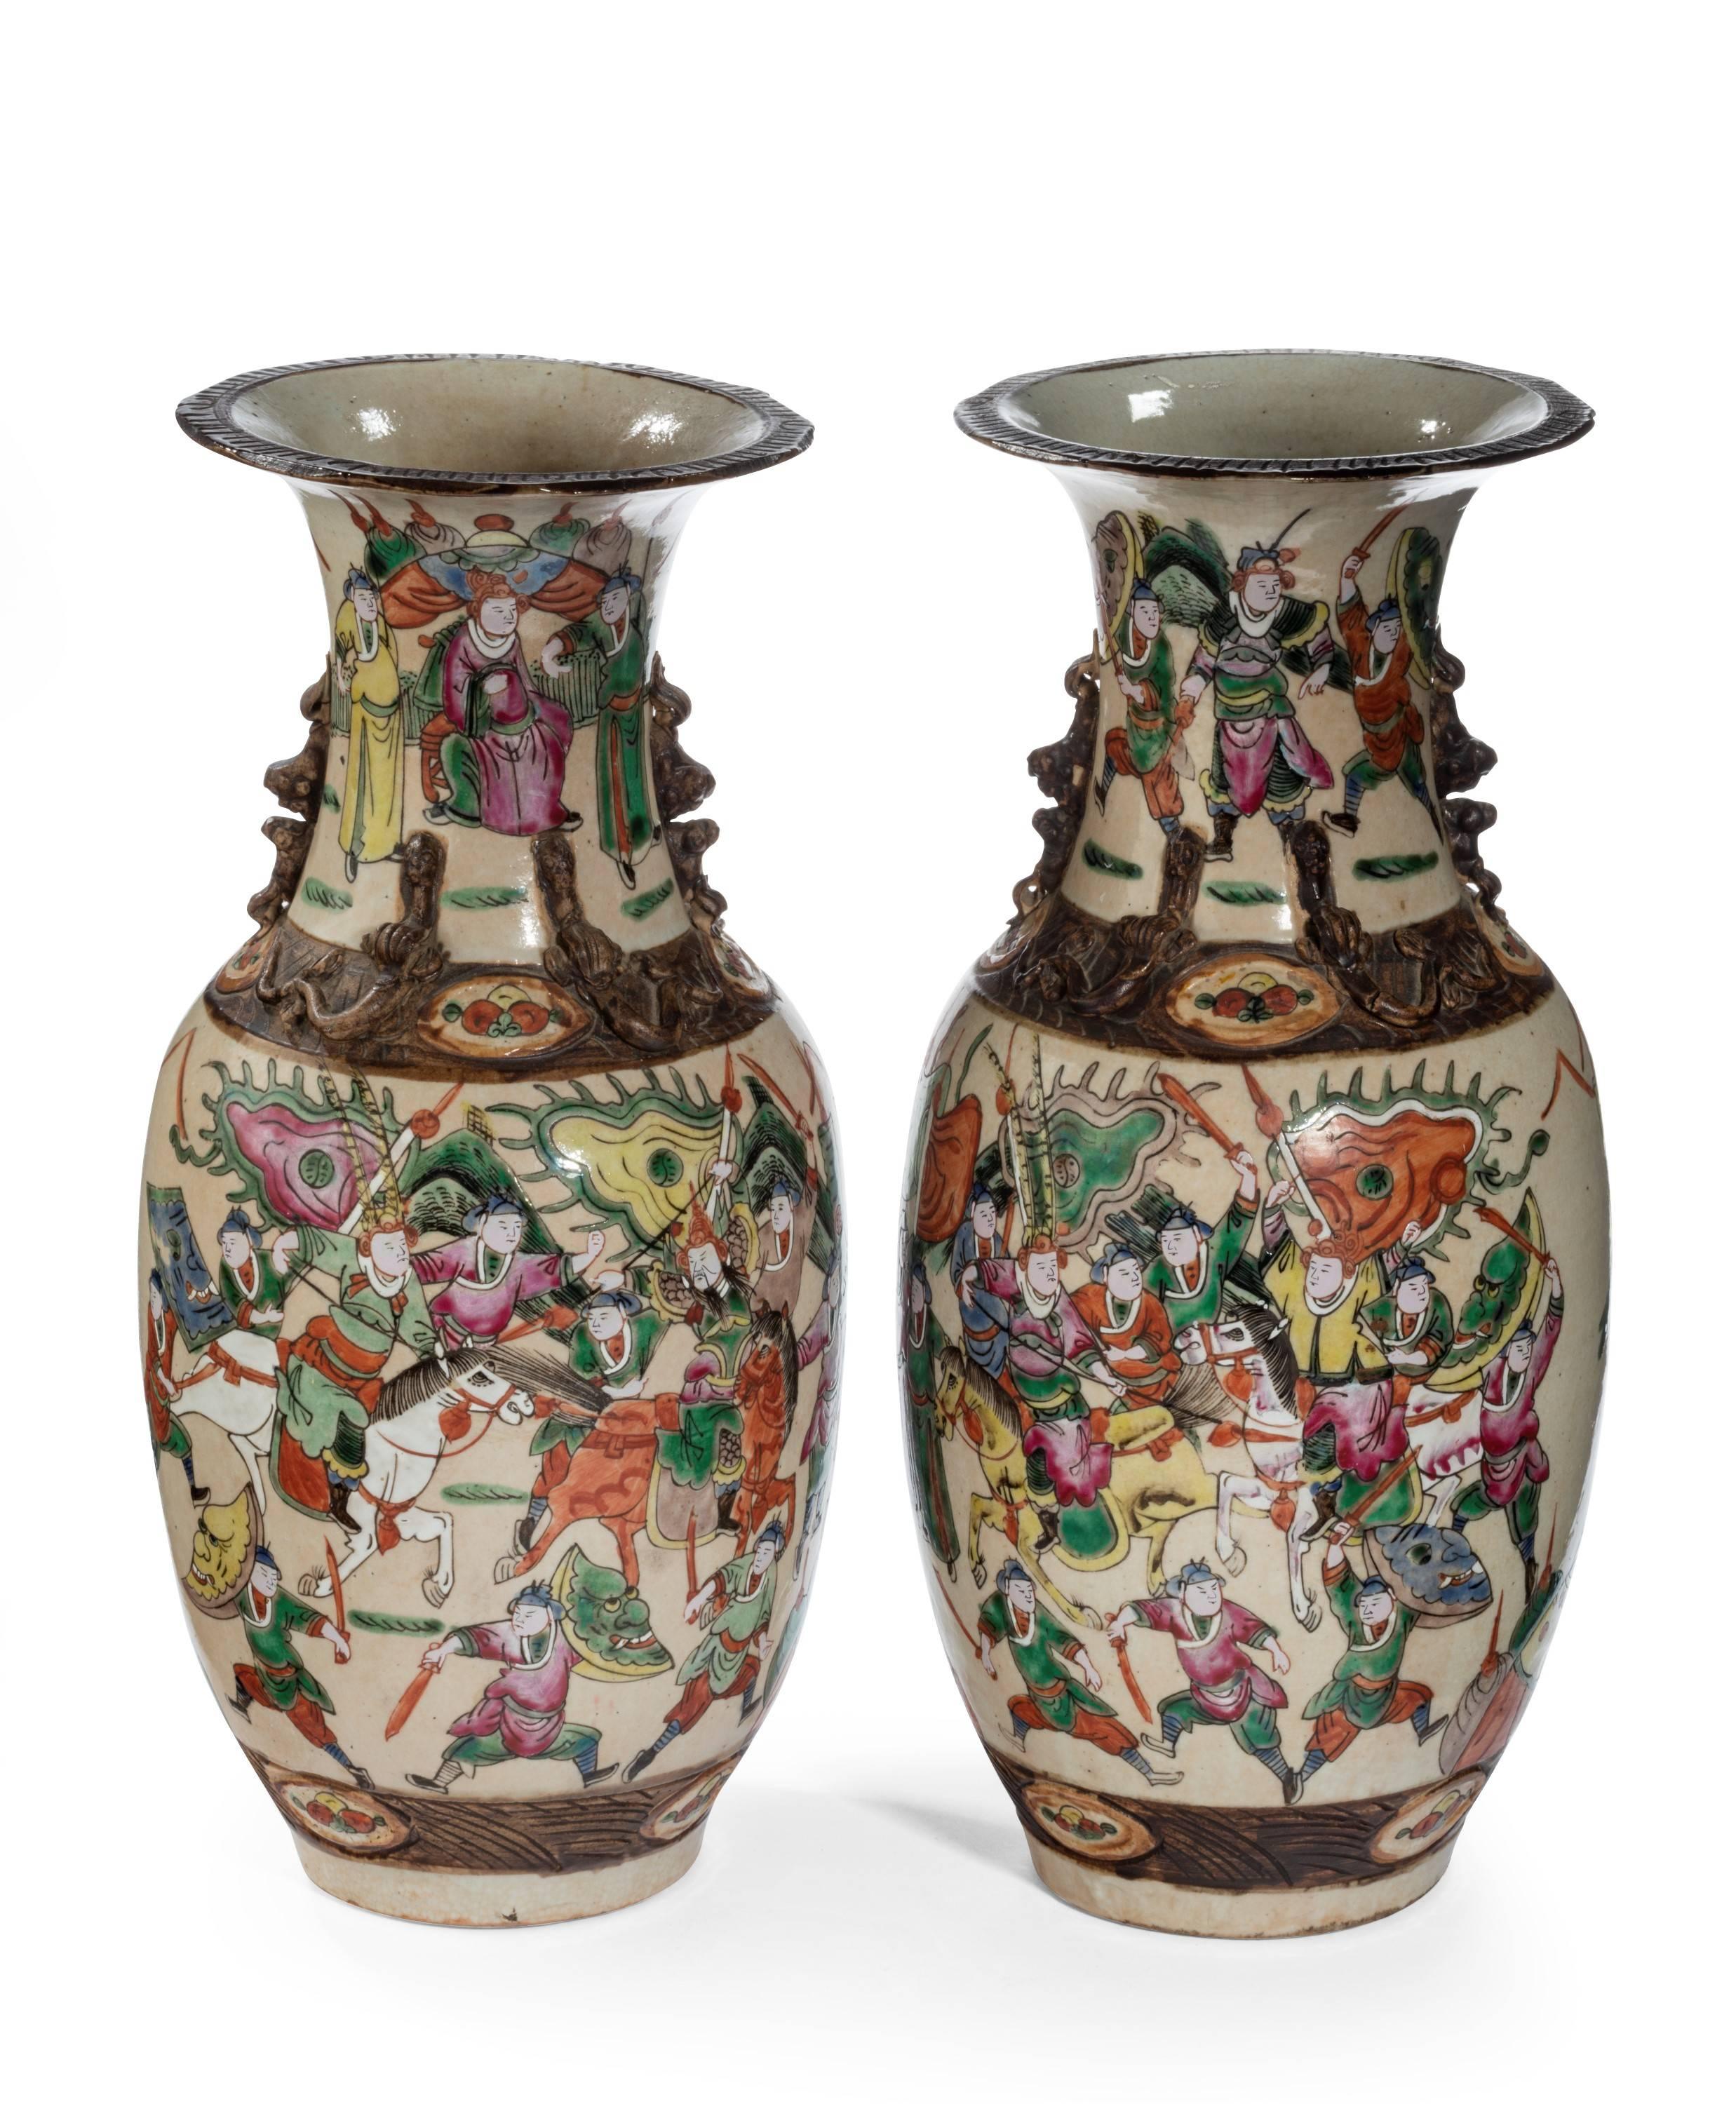 English Pair of Late 19th Century Crackleware Vases